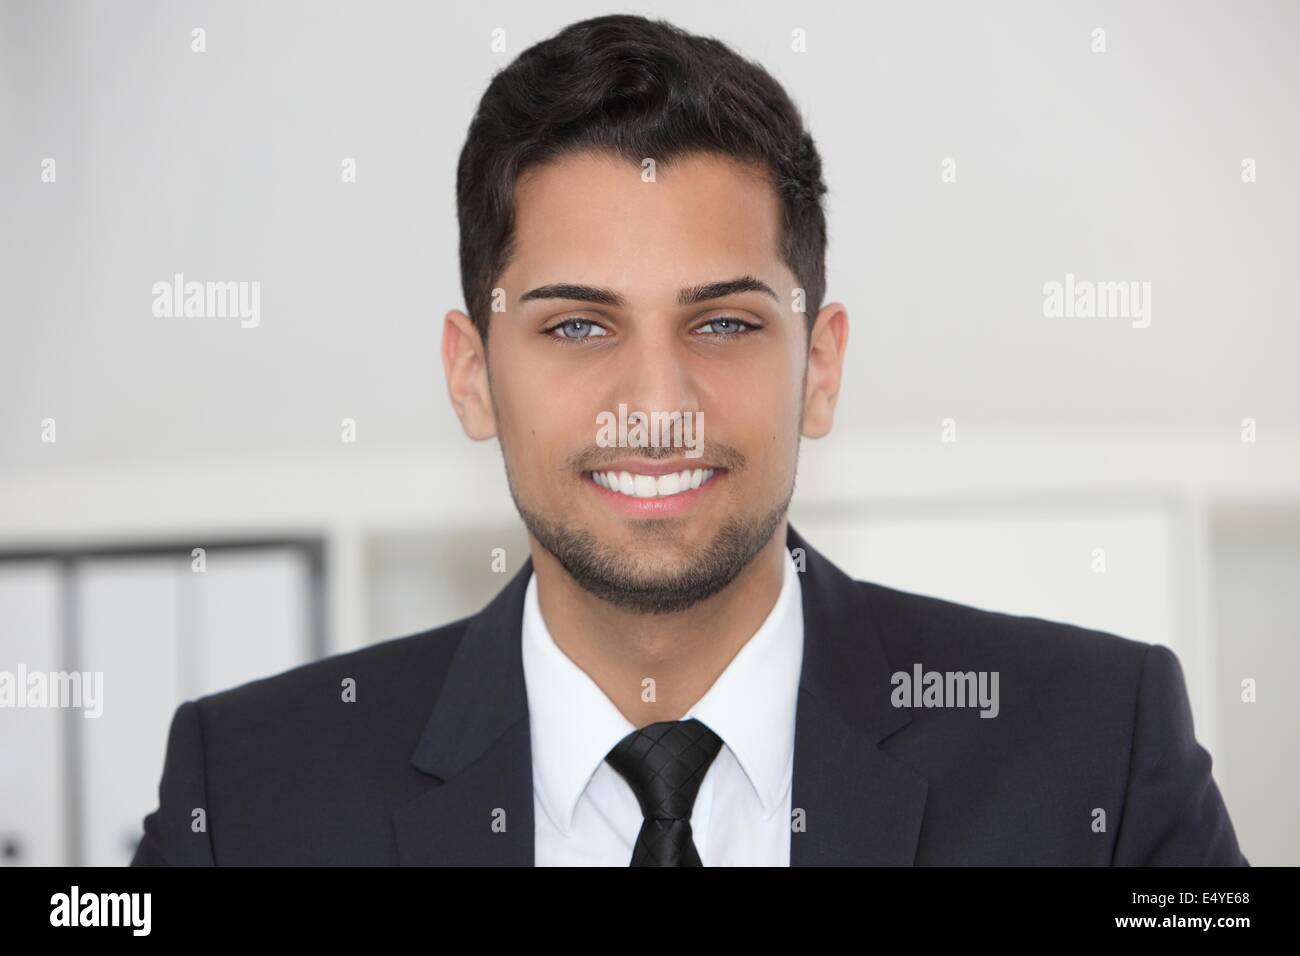 Smiling friendly businessman Stock Photo